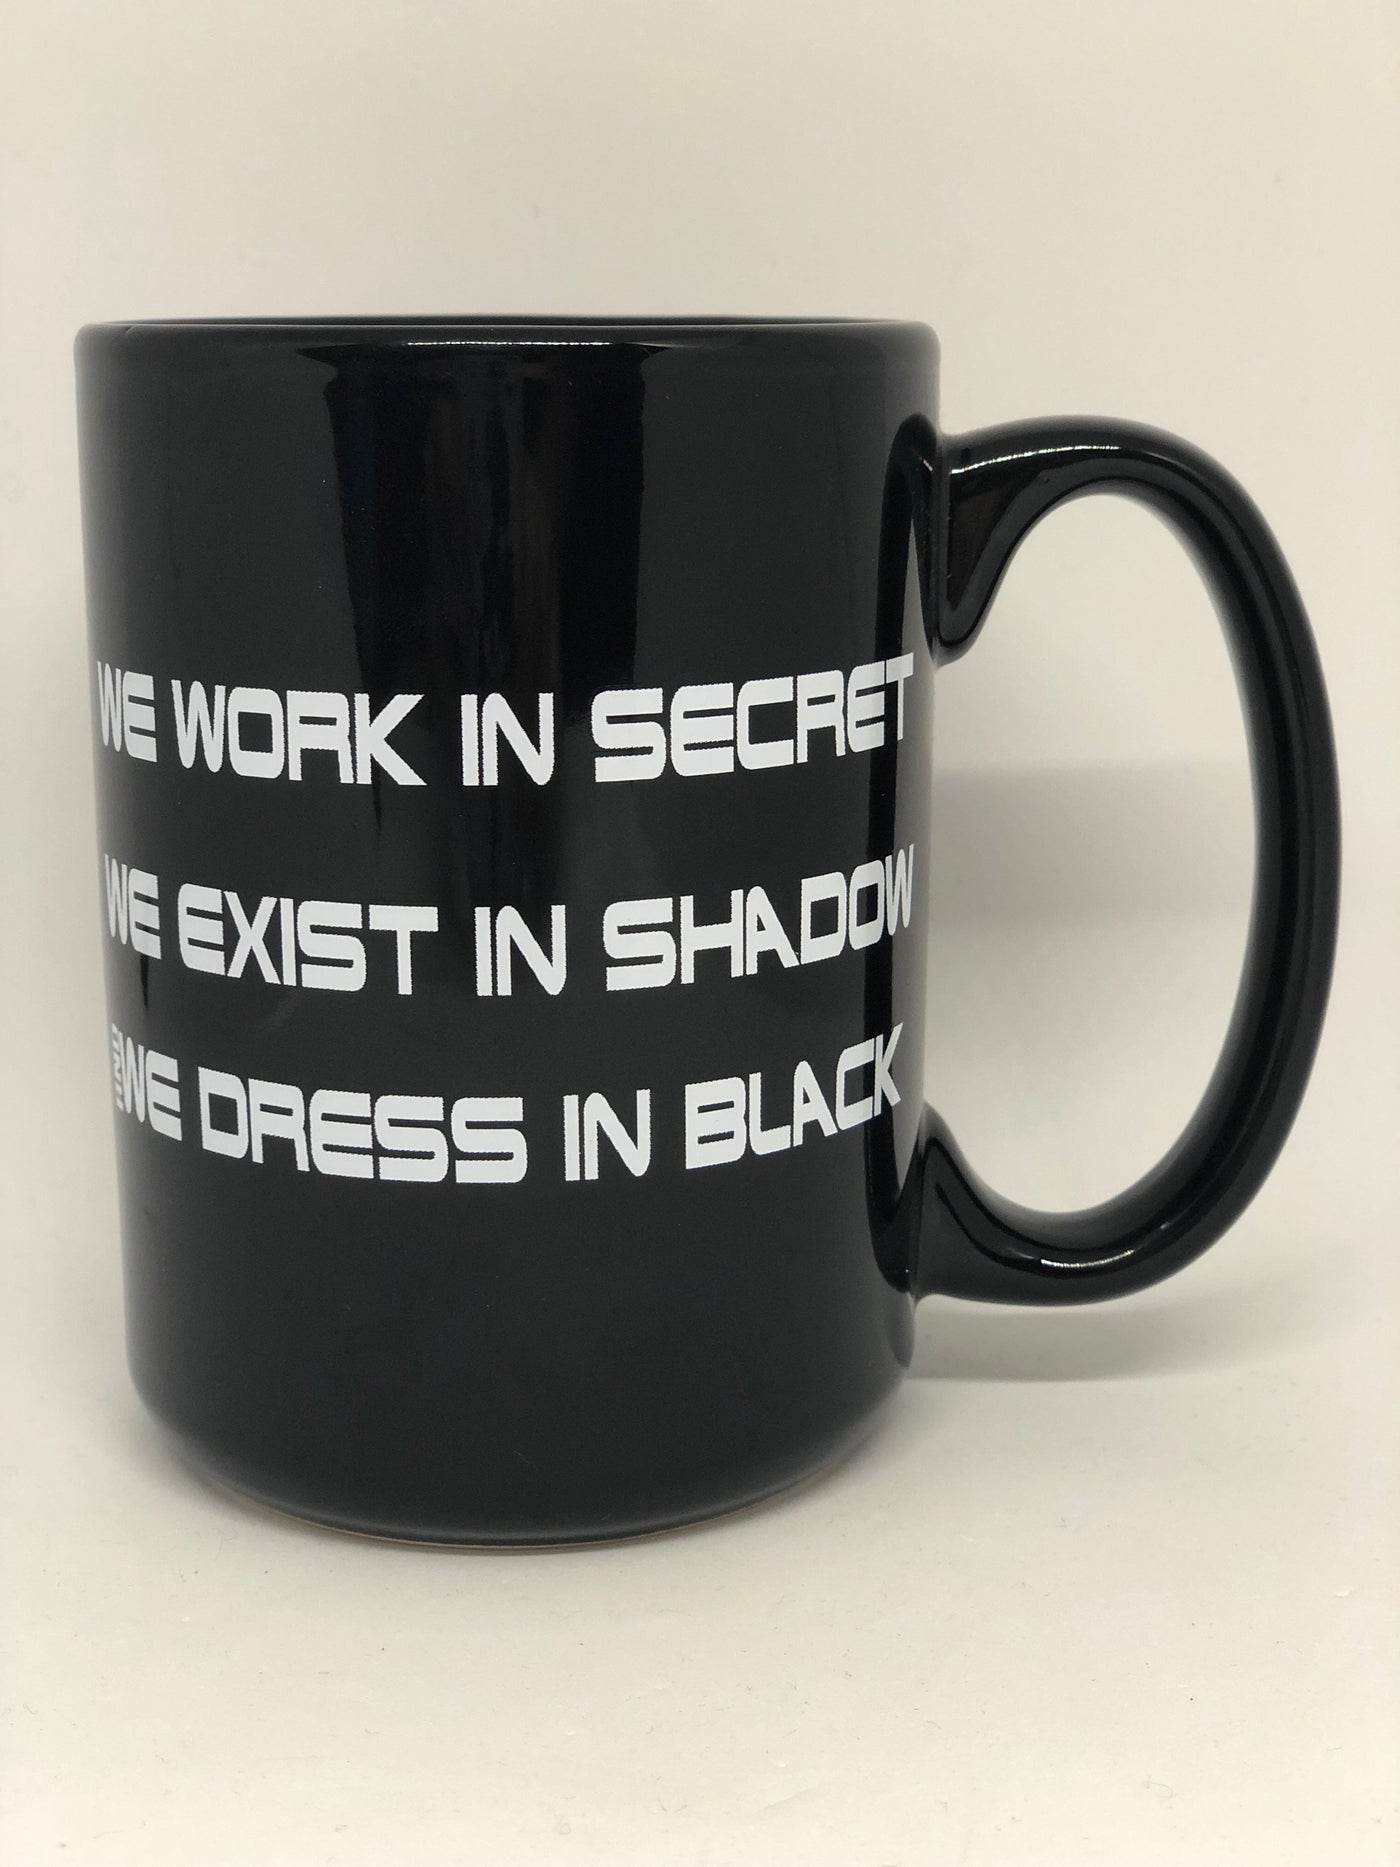 universal studios men in black alien attack ceramic coffee mug new